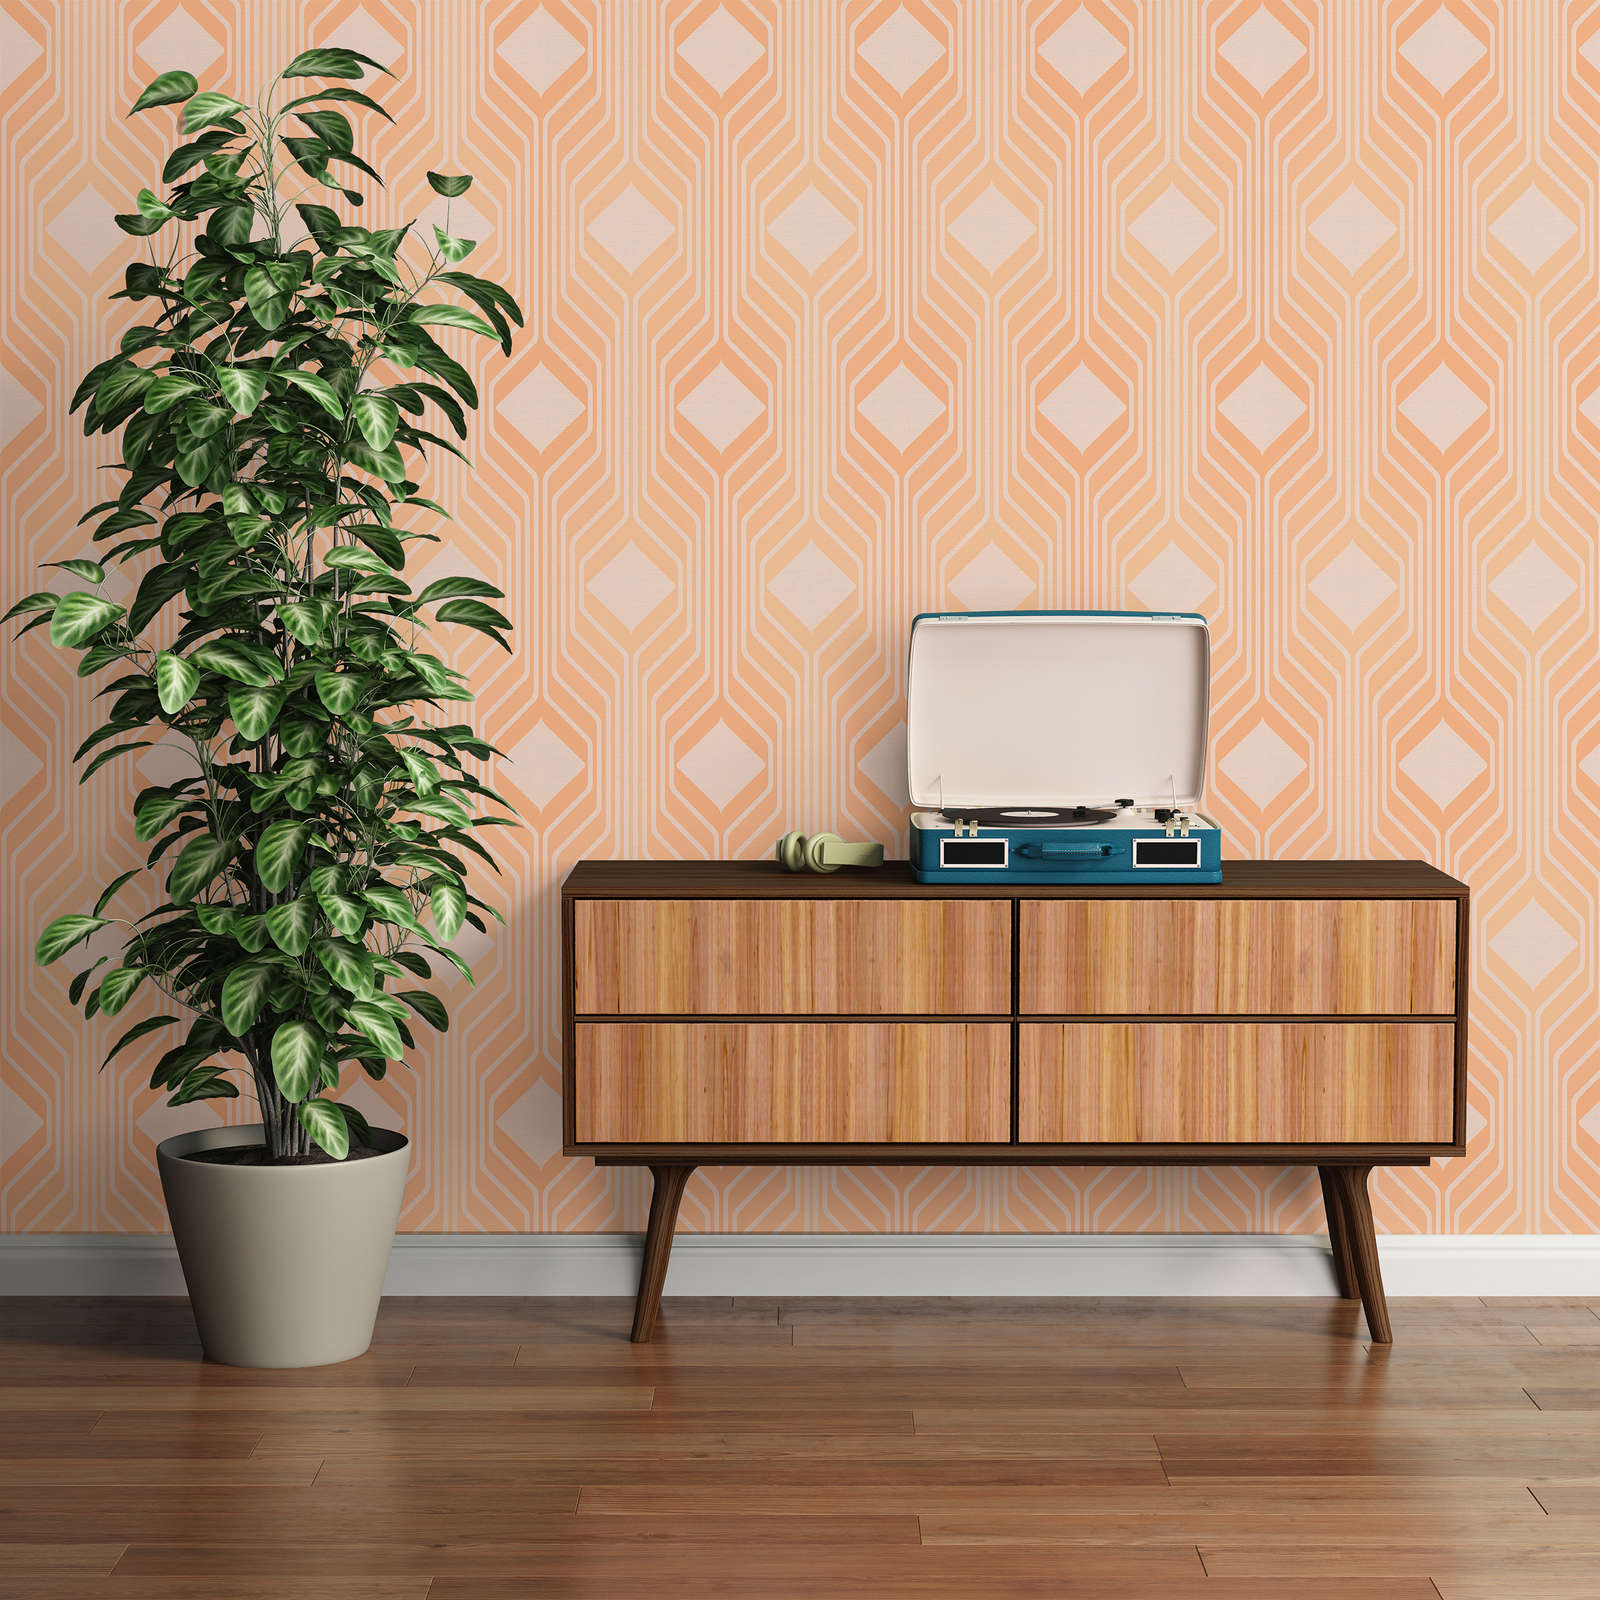             Retro wallpaper with diamond pattern in warm colours - orange, beige
        